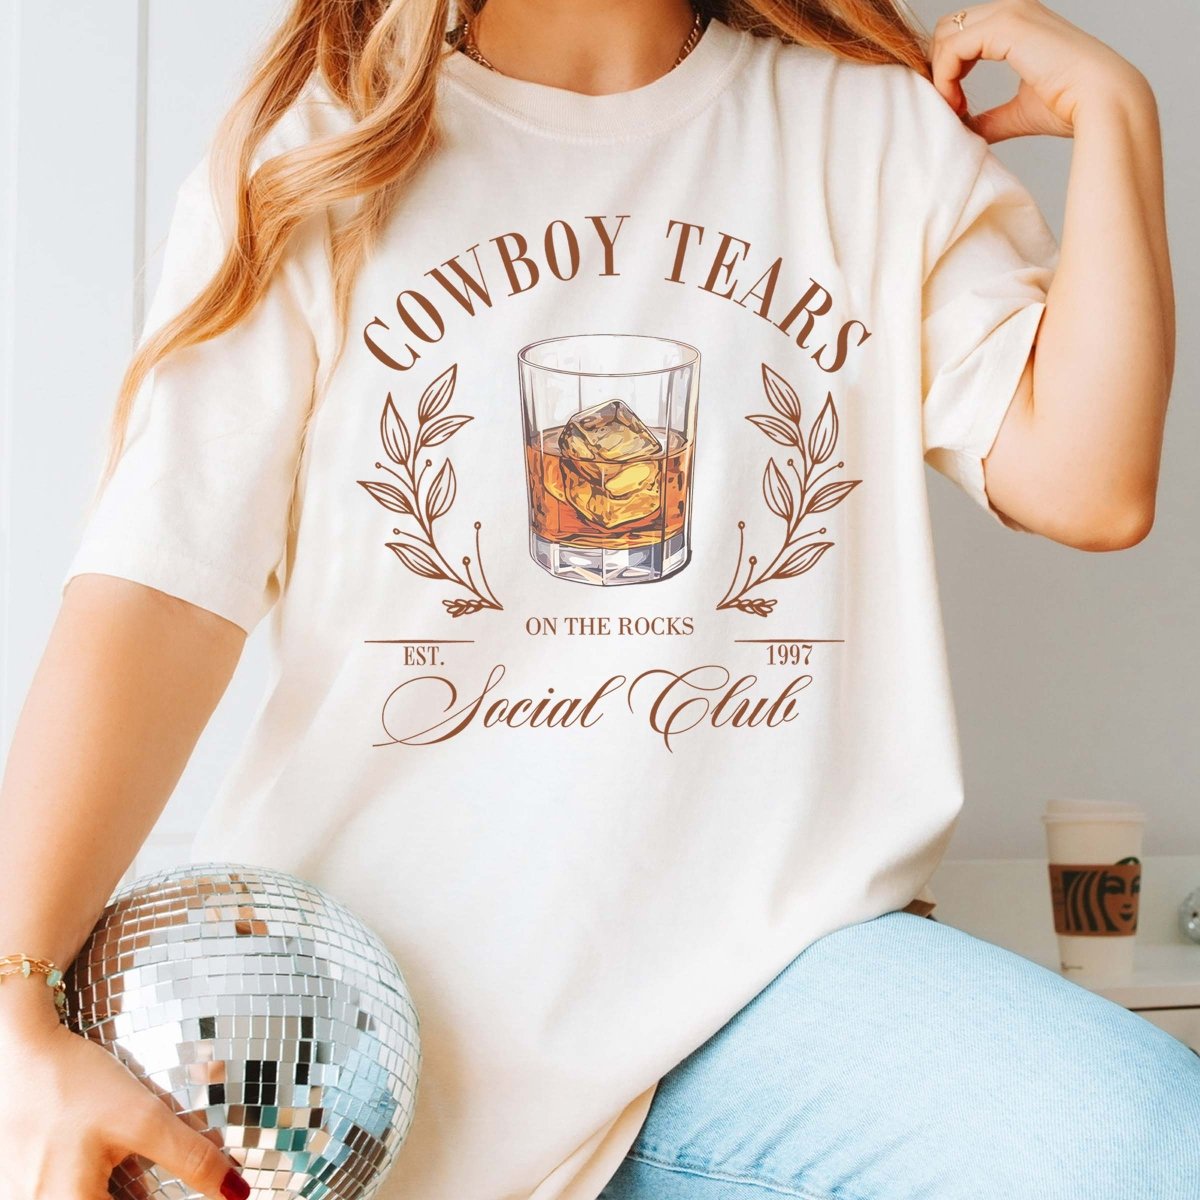 Cowboy Tears Social Club Tee - Limeberry Designs